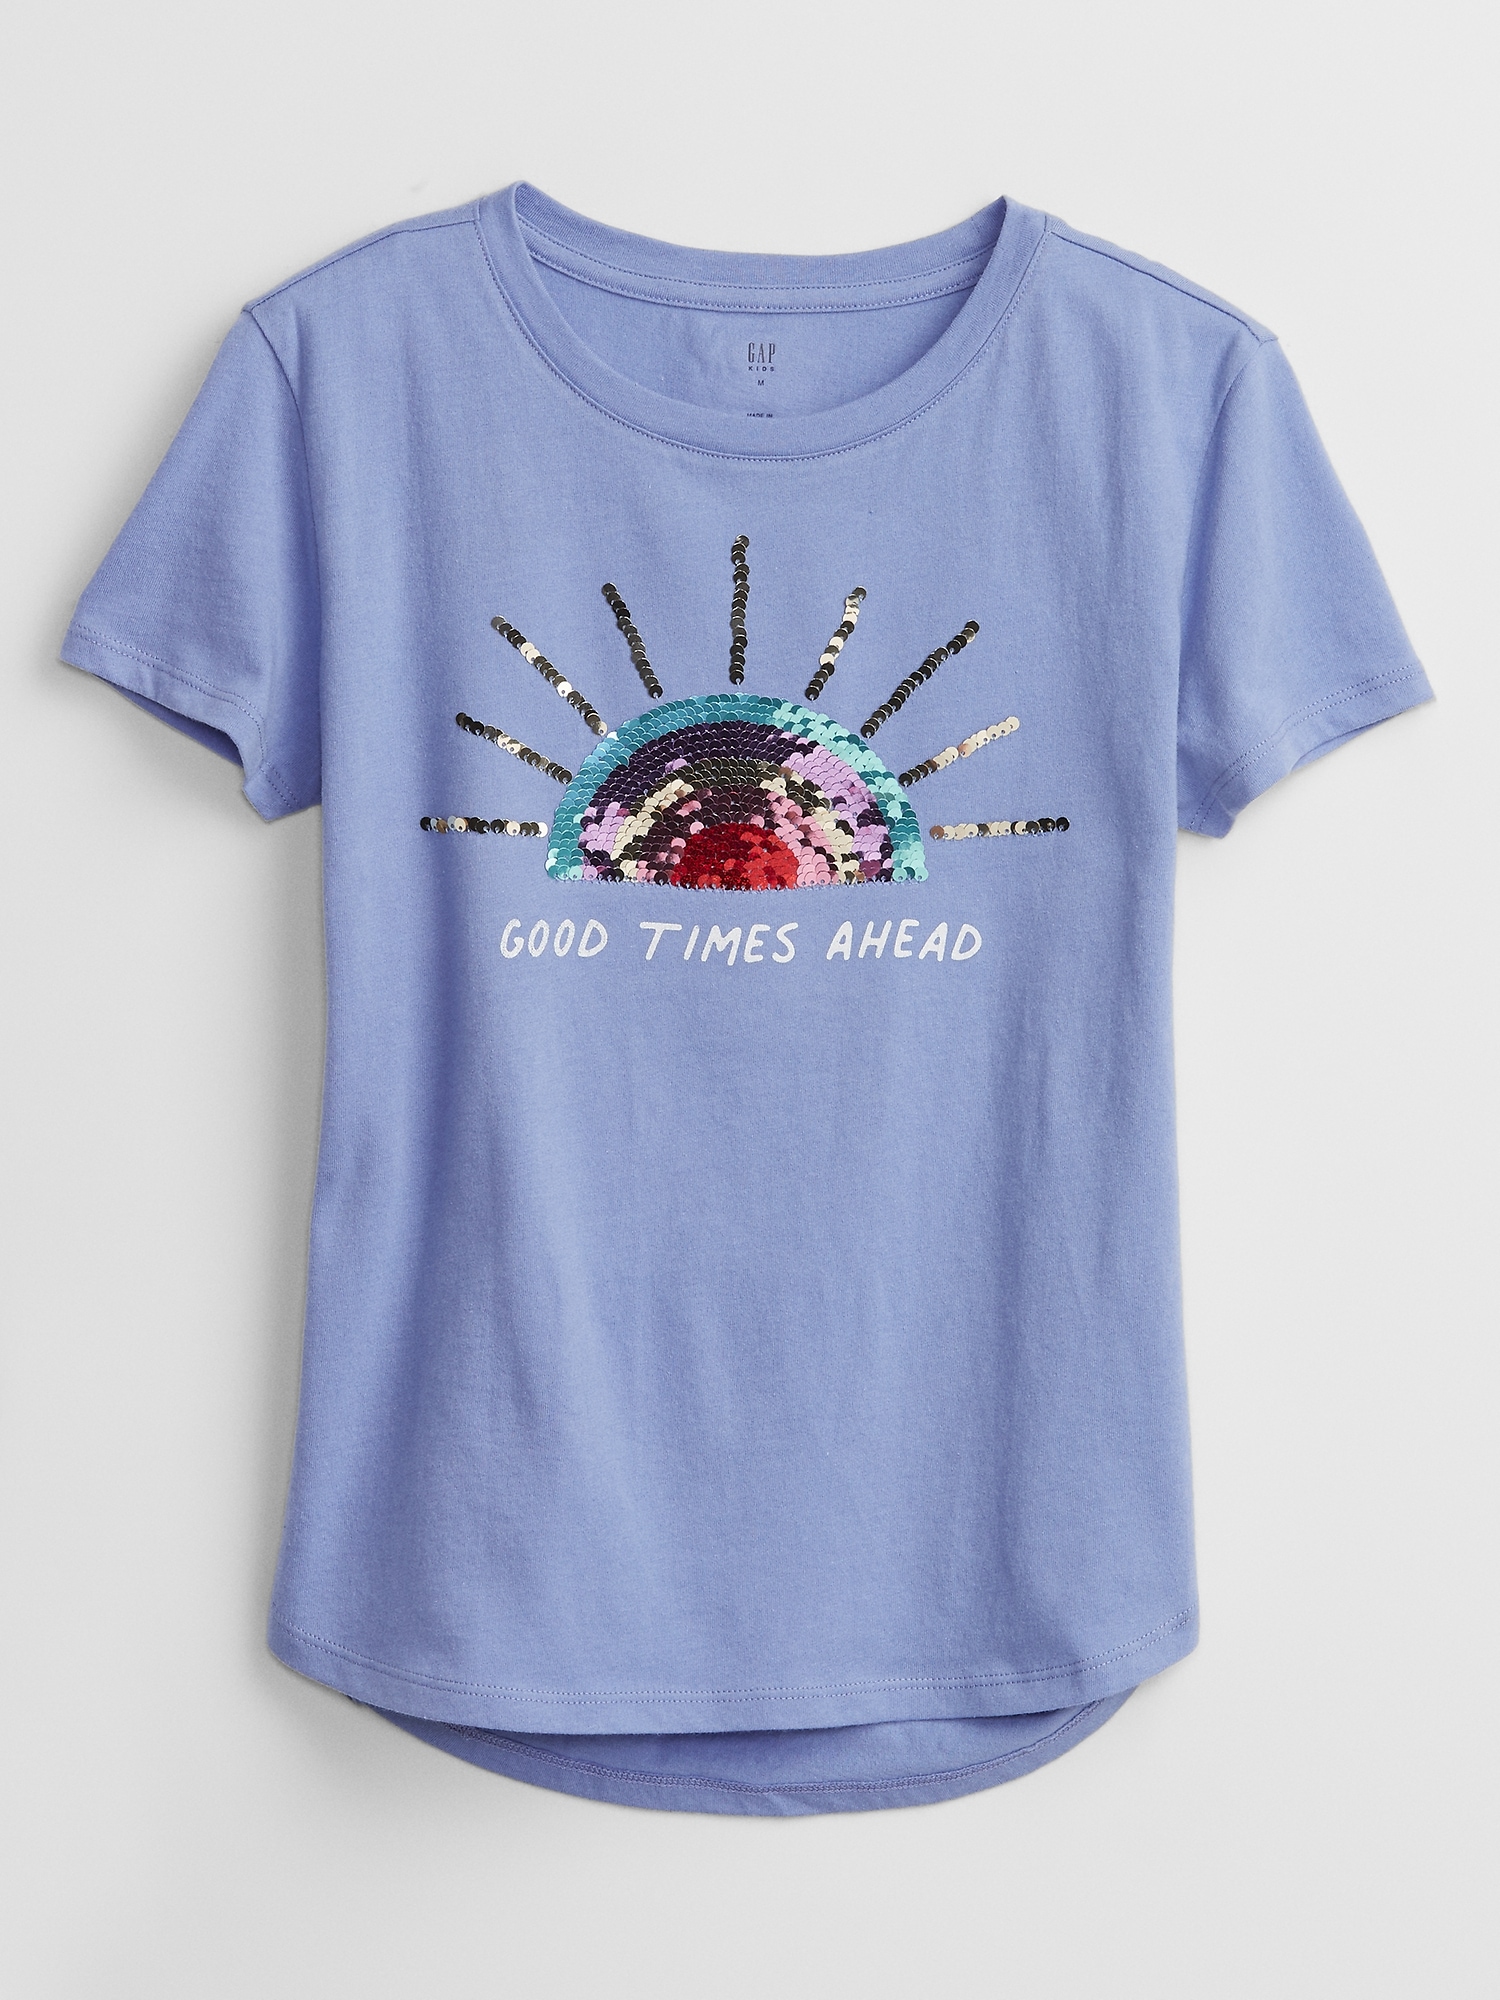 Kids Flippy Sequin Graphic T-Shirt | Gap Factory